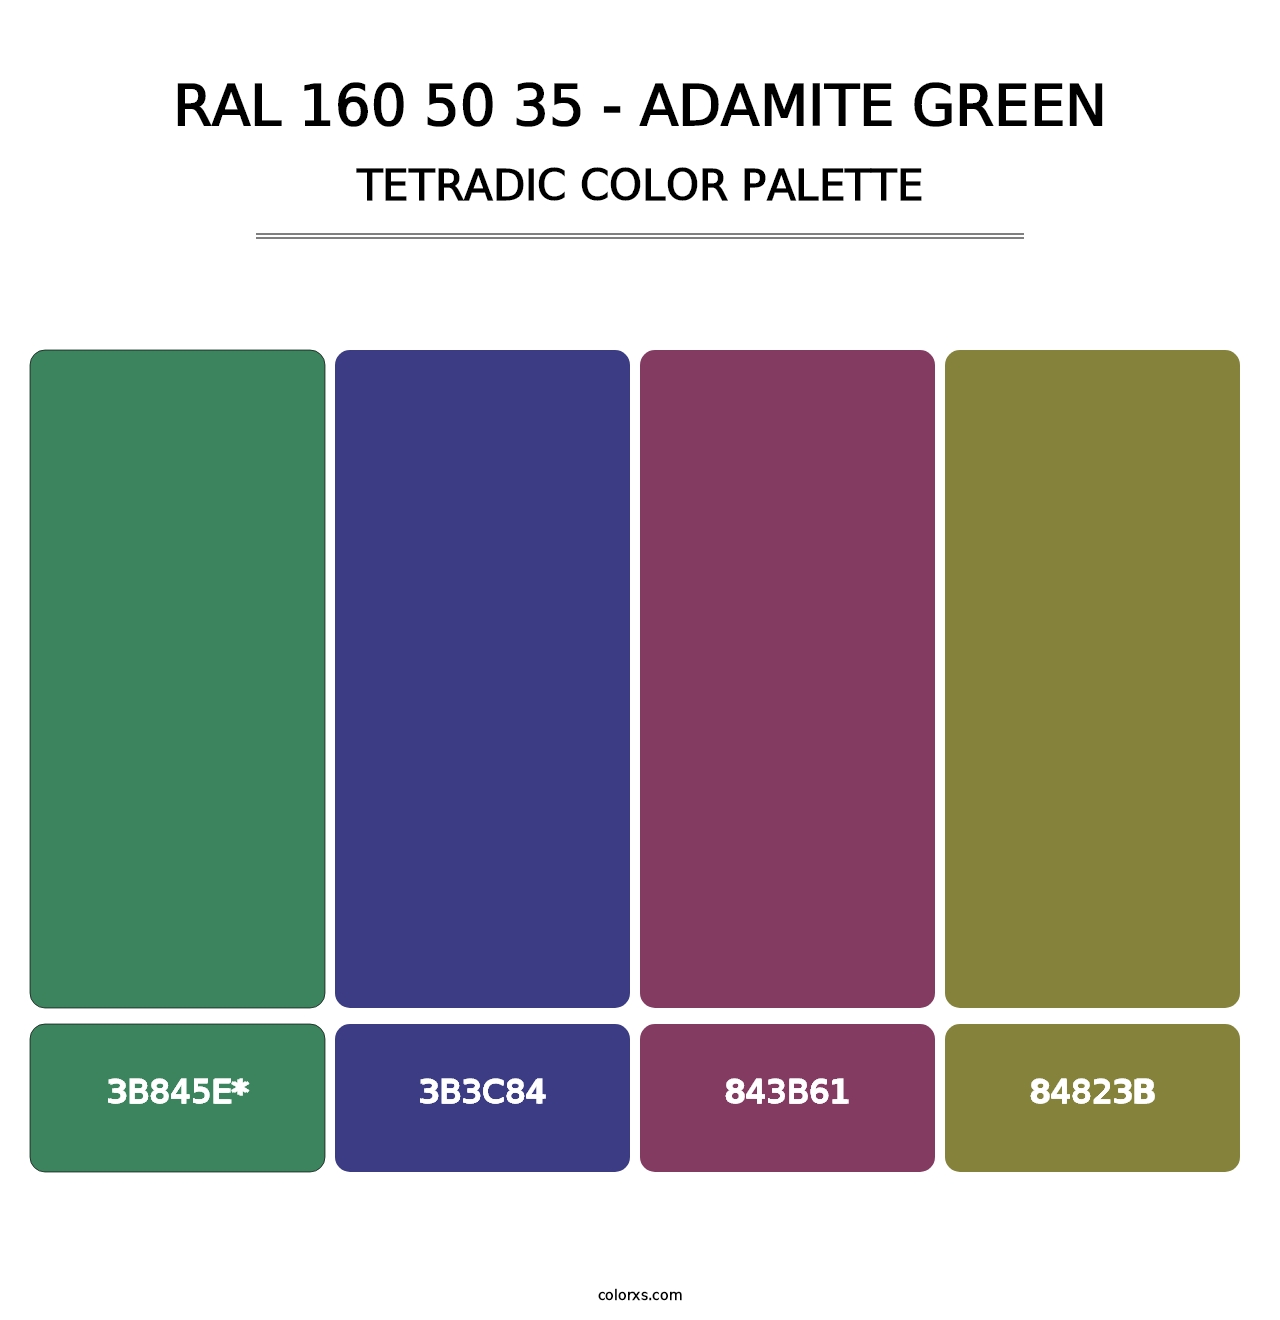 RAL 160 50 35 - Adamite Green - Tetradic Color Palette